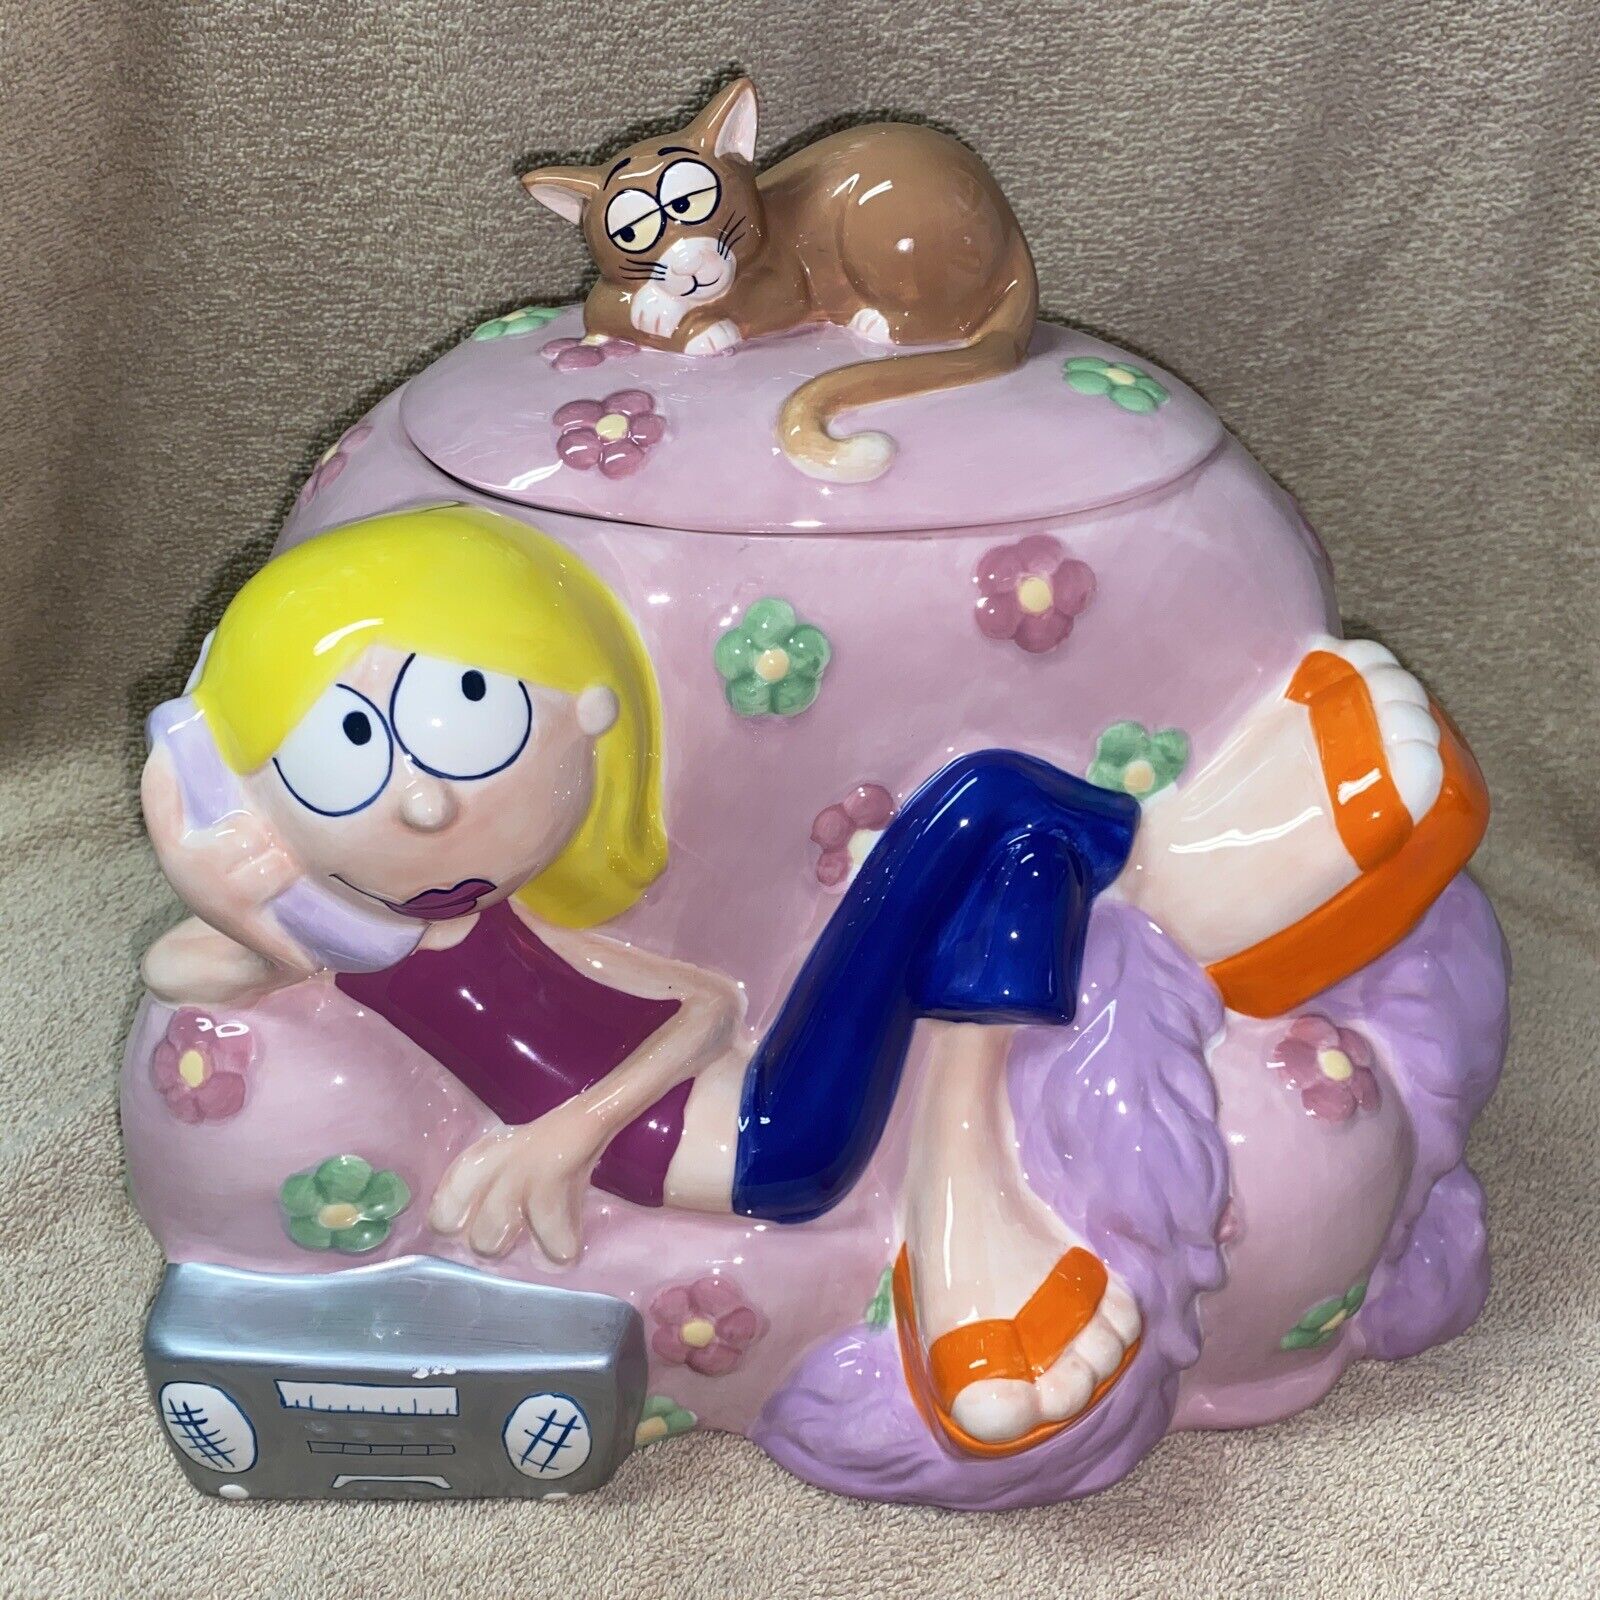 Disney - Lizzie McGuire Cookie Jar - Cartoon Vintage Ceramic Jar-Hilary Duff